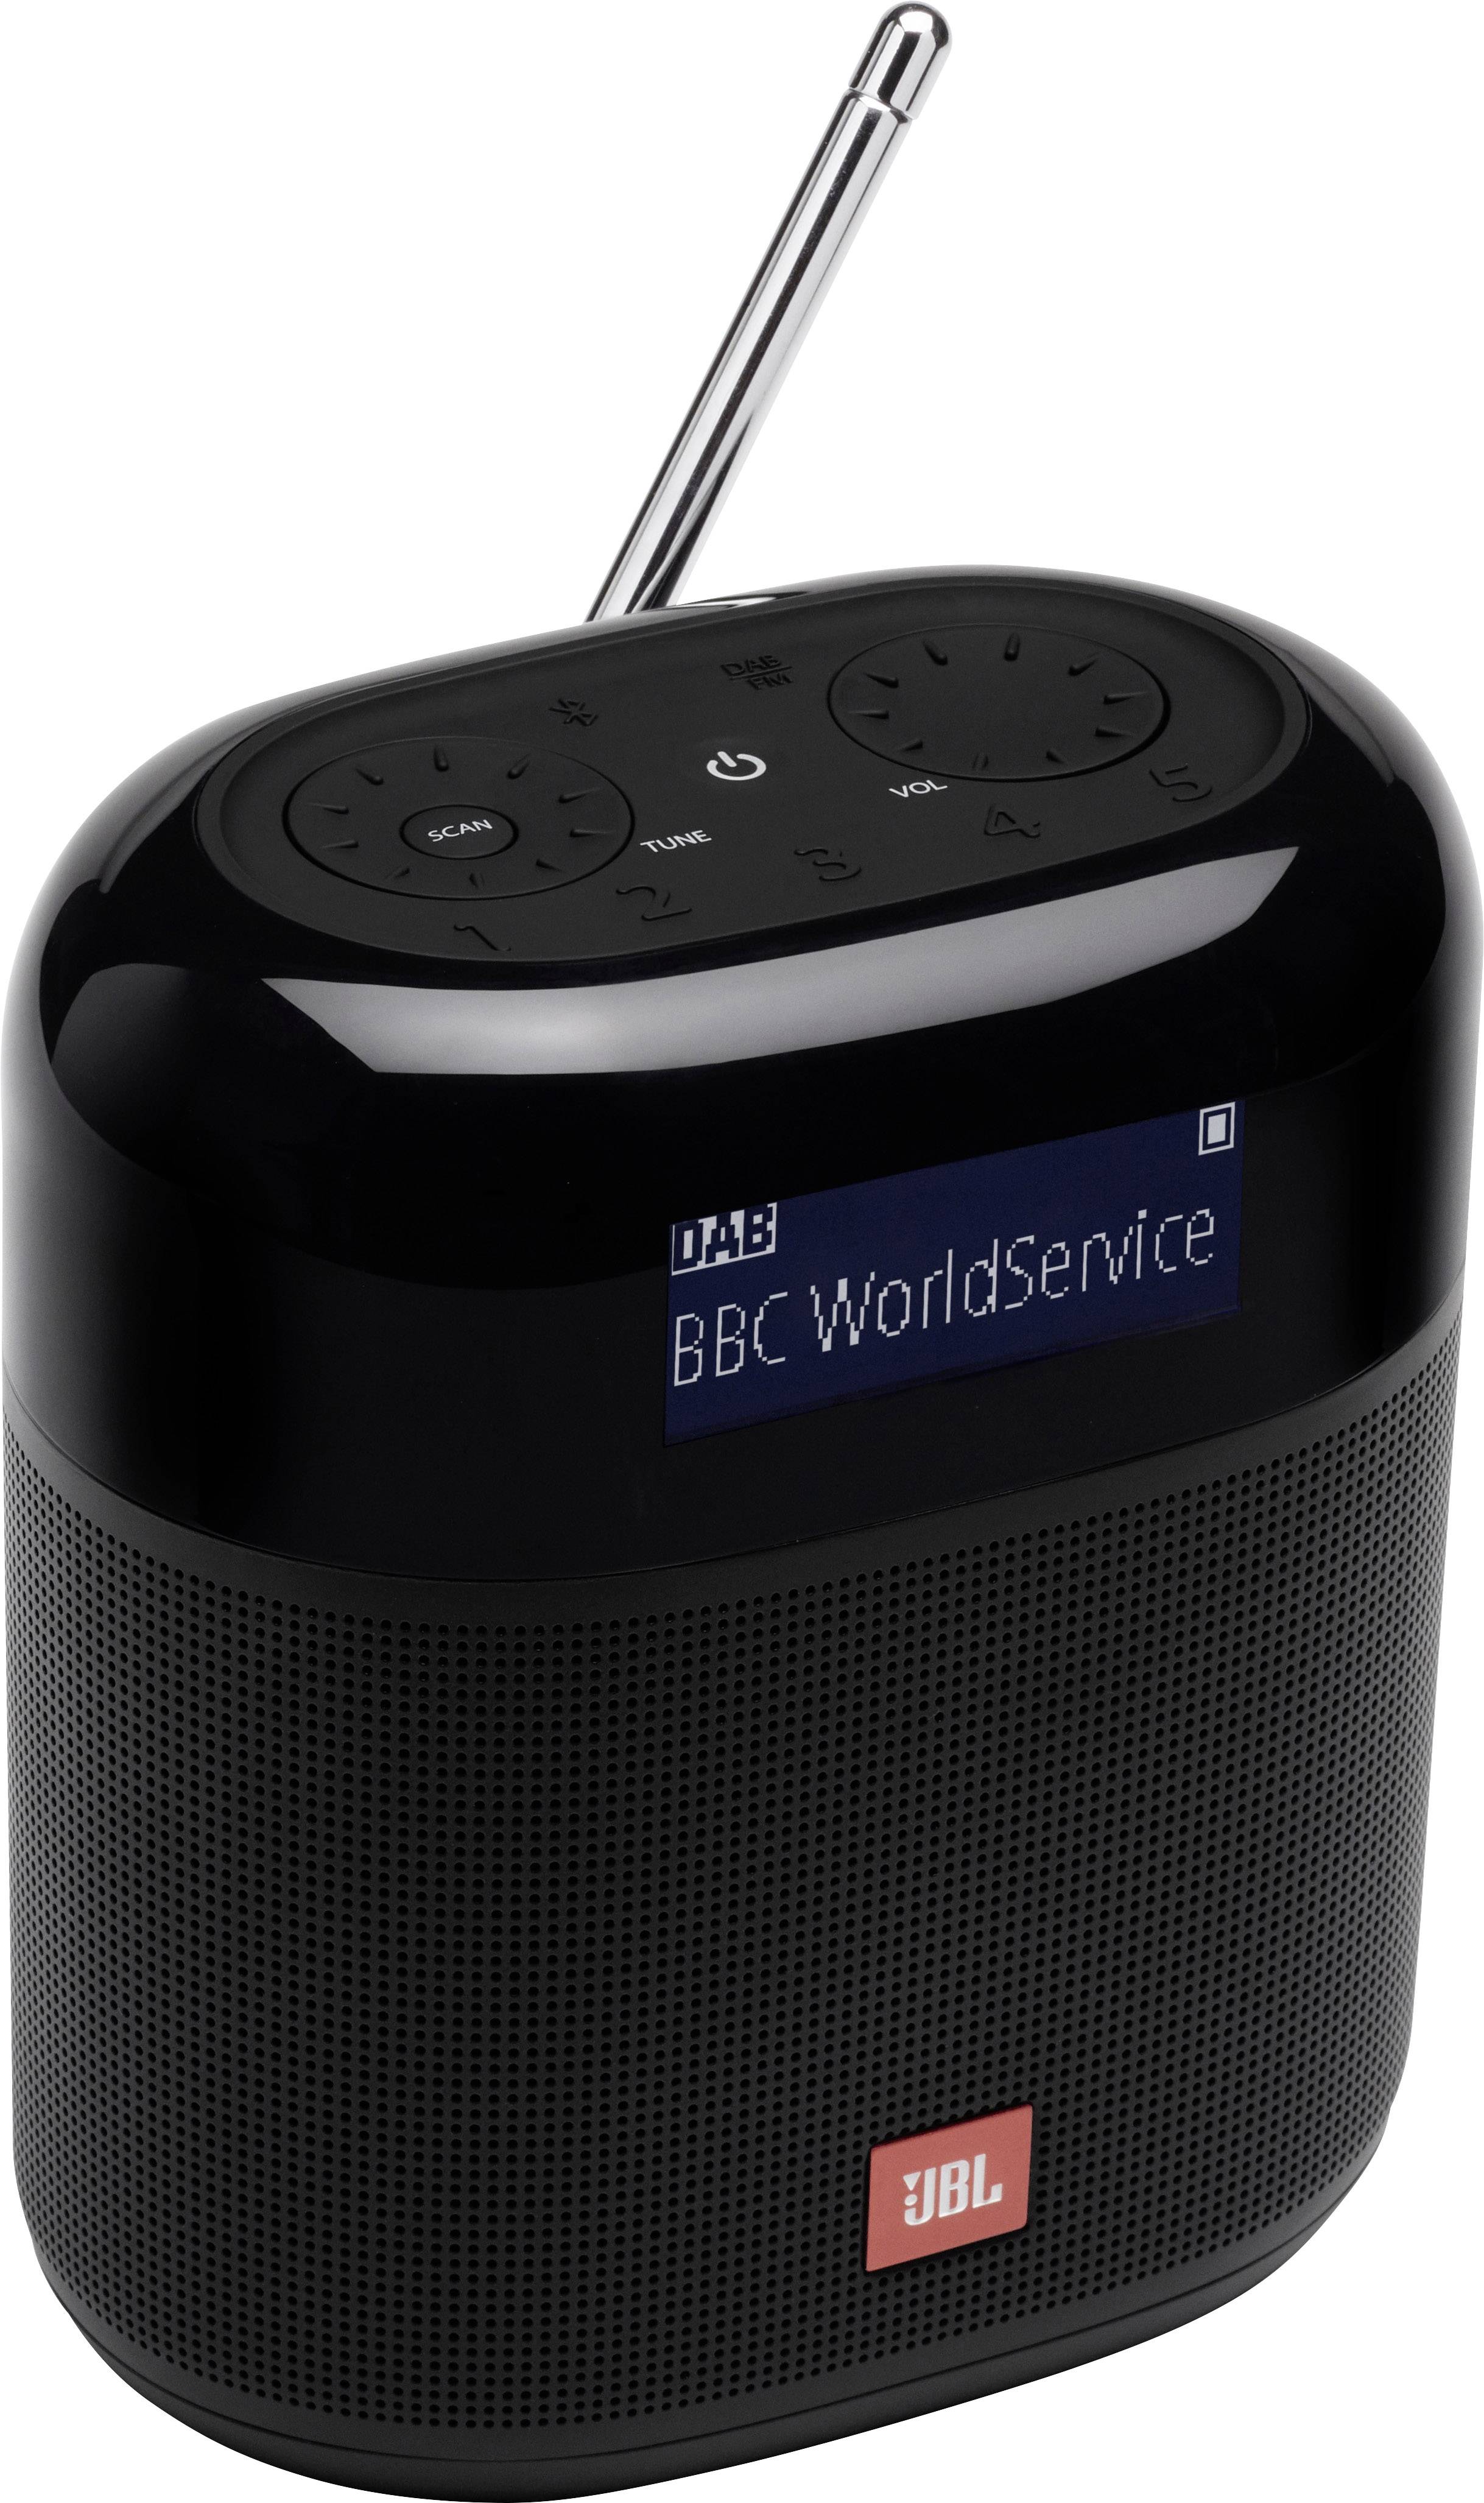 inspanning vervaldatum enthousiasme JBL Tuner XL Bluetooth speaker FM radio, spray-proof Black | Conrad.com